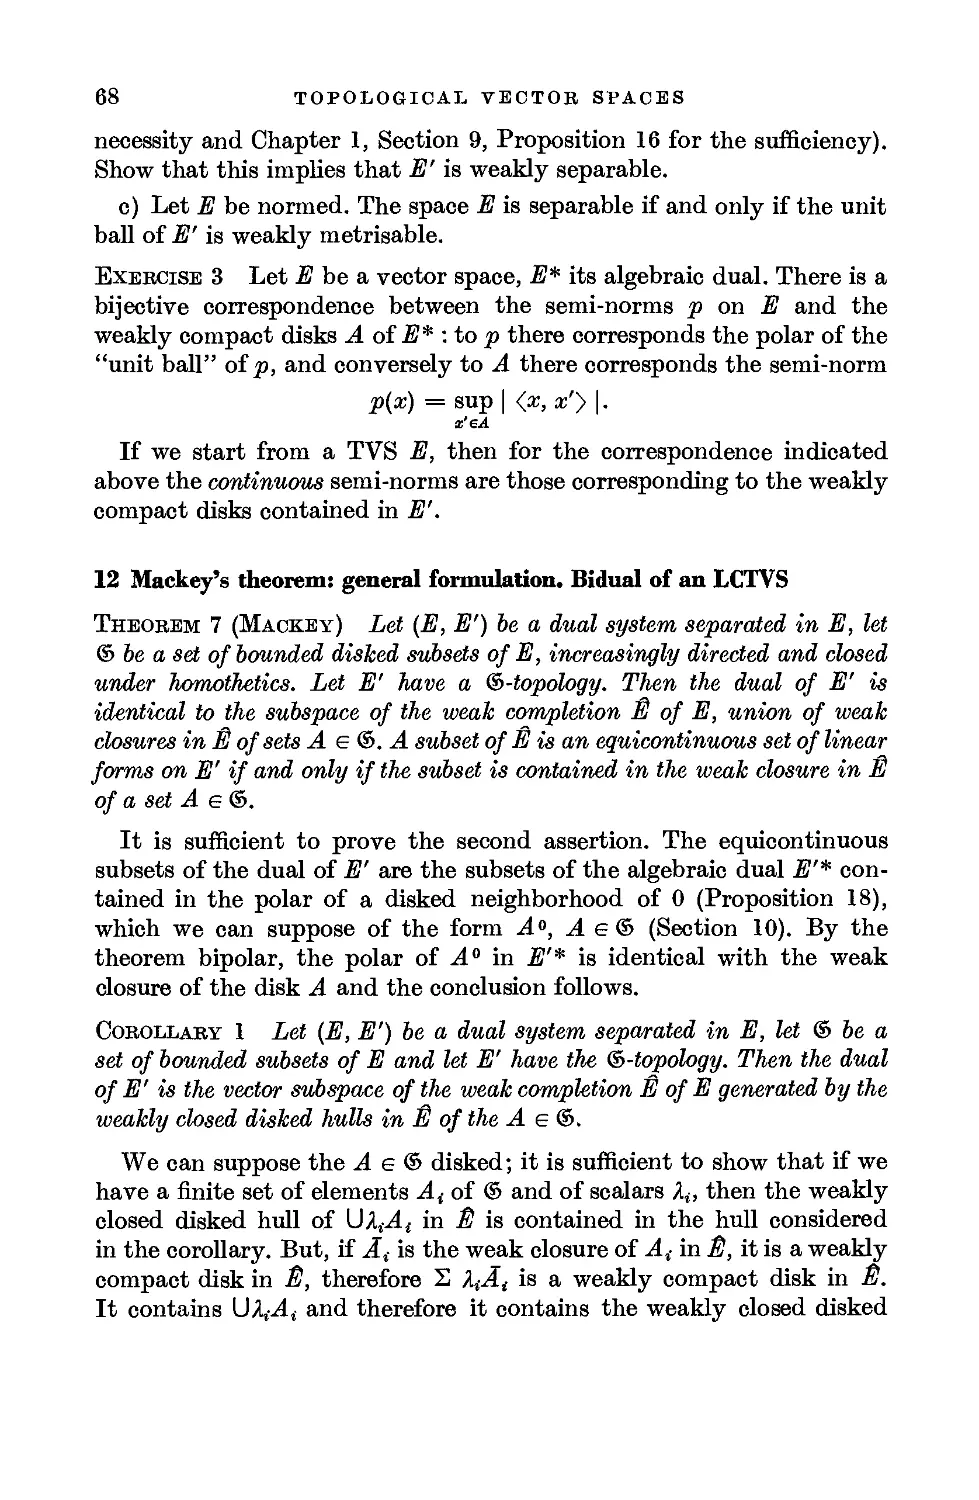 12. Mackey's theorem: general formulation. Bidual of an LCTVS